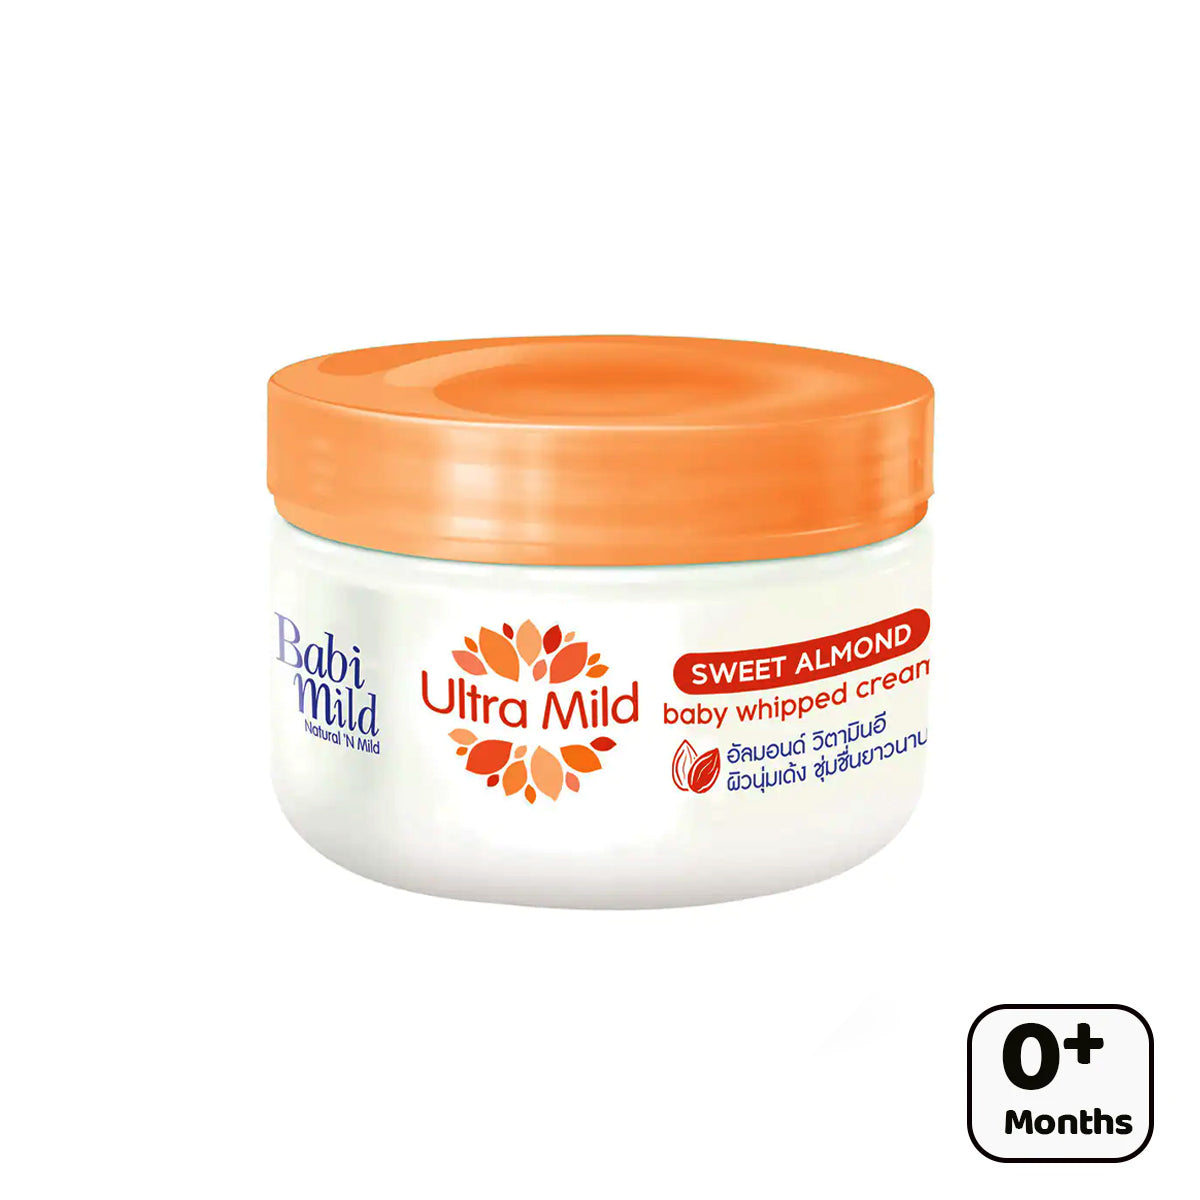 Babi Mild - Ultra Mild Sweet Almond Baby Cream (50g)